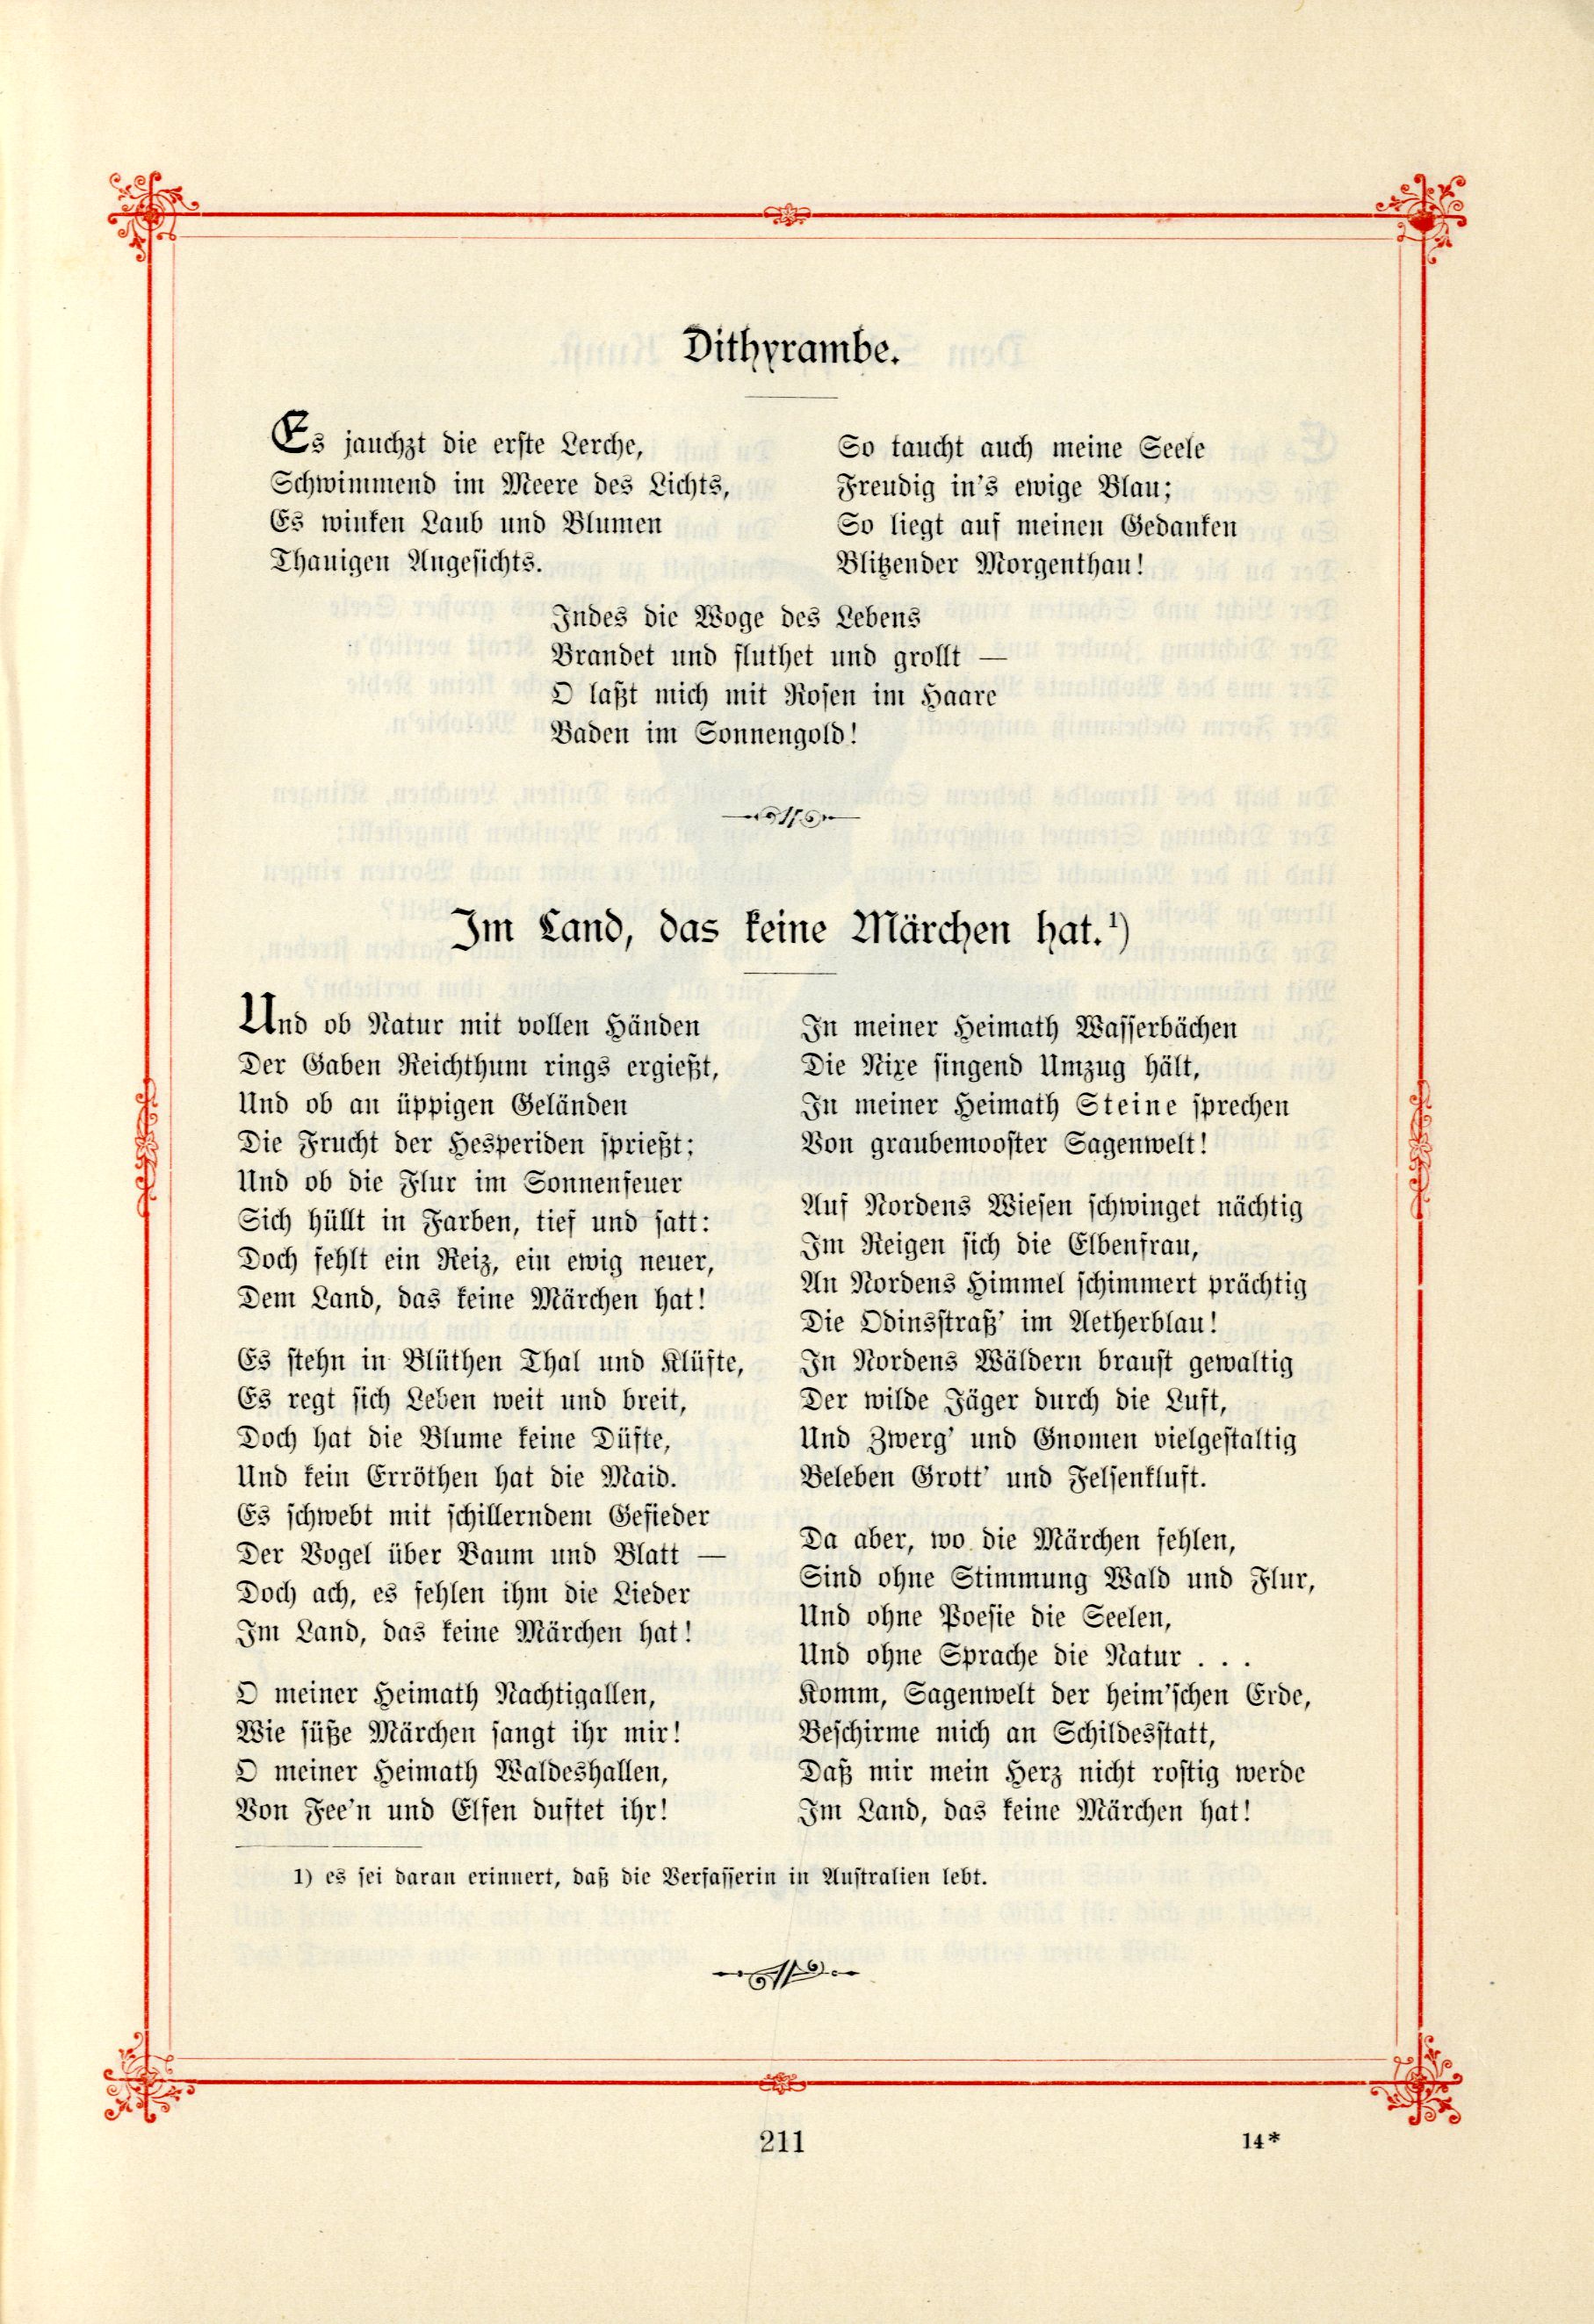 Dithyrambe (1895) | 1. (211) Основной текст